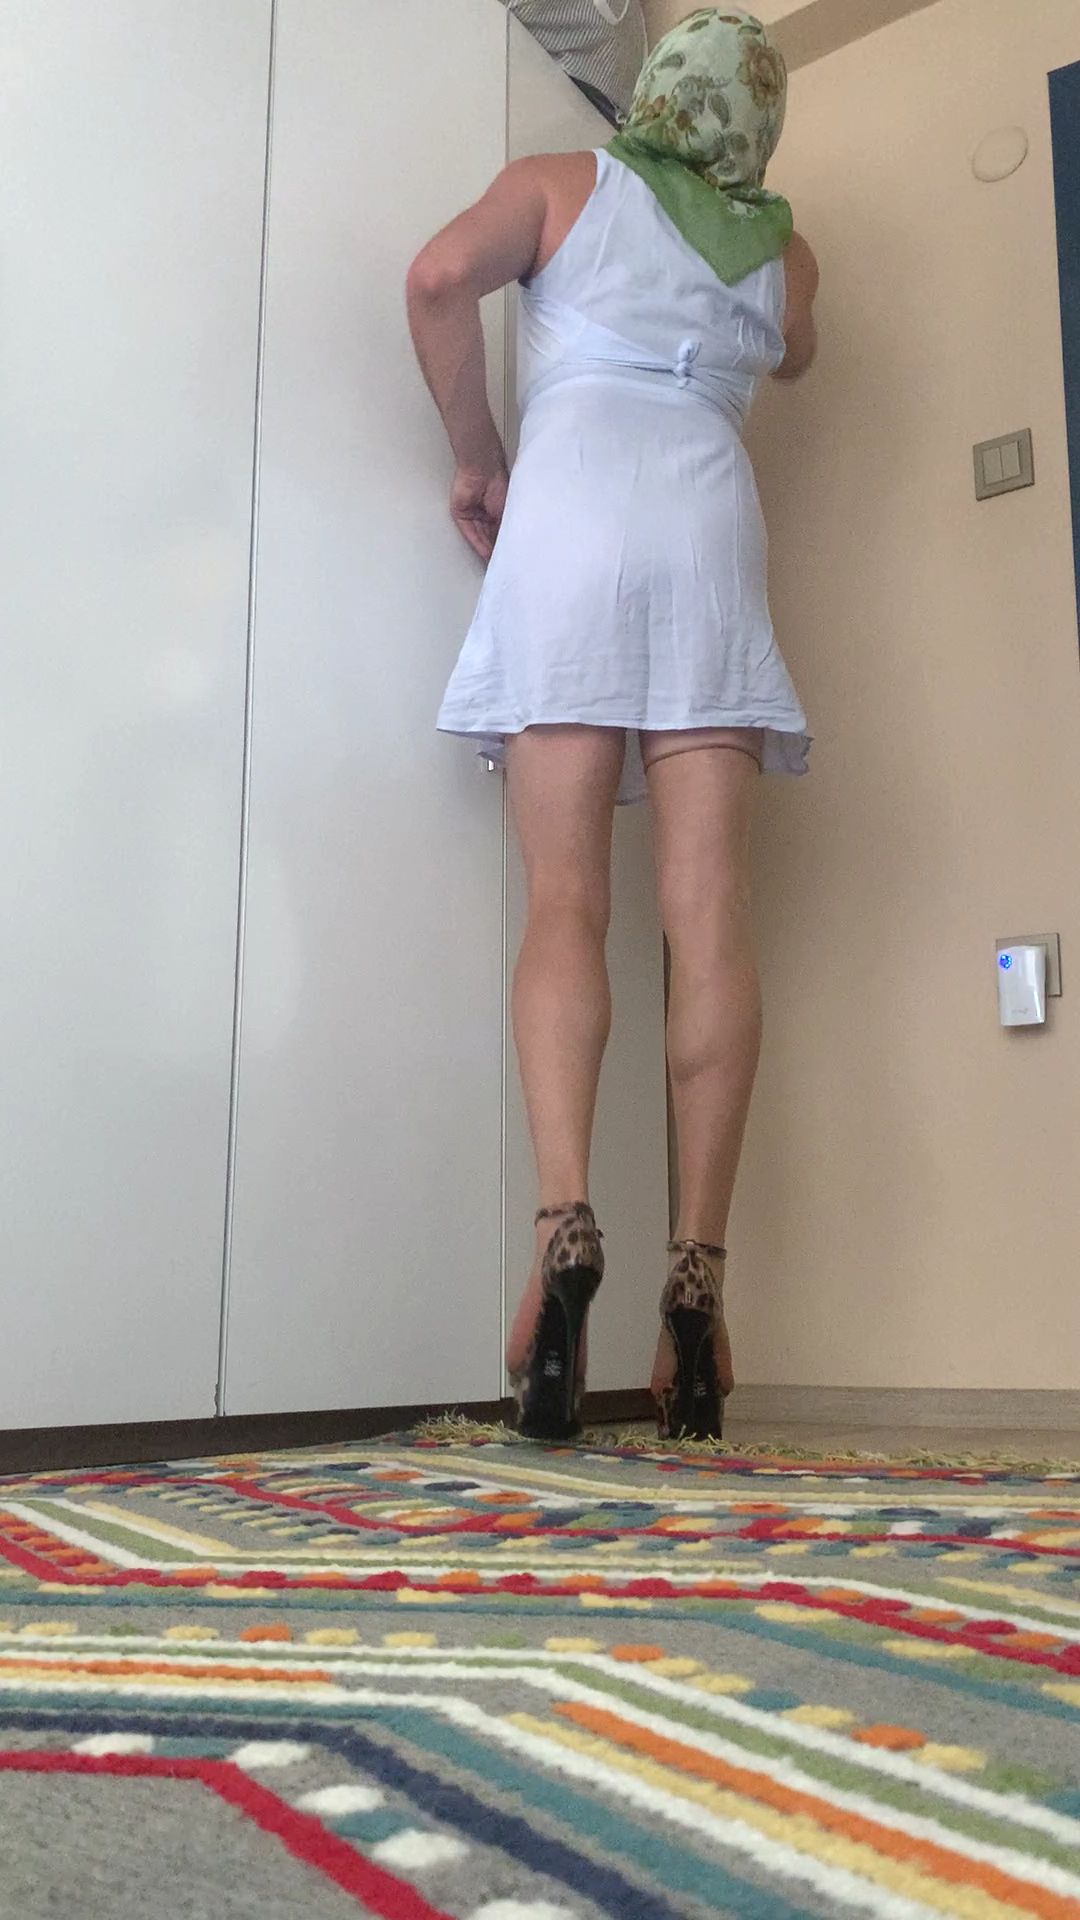 My Office Friend's High Heels #38